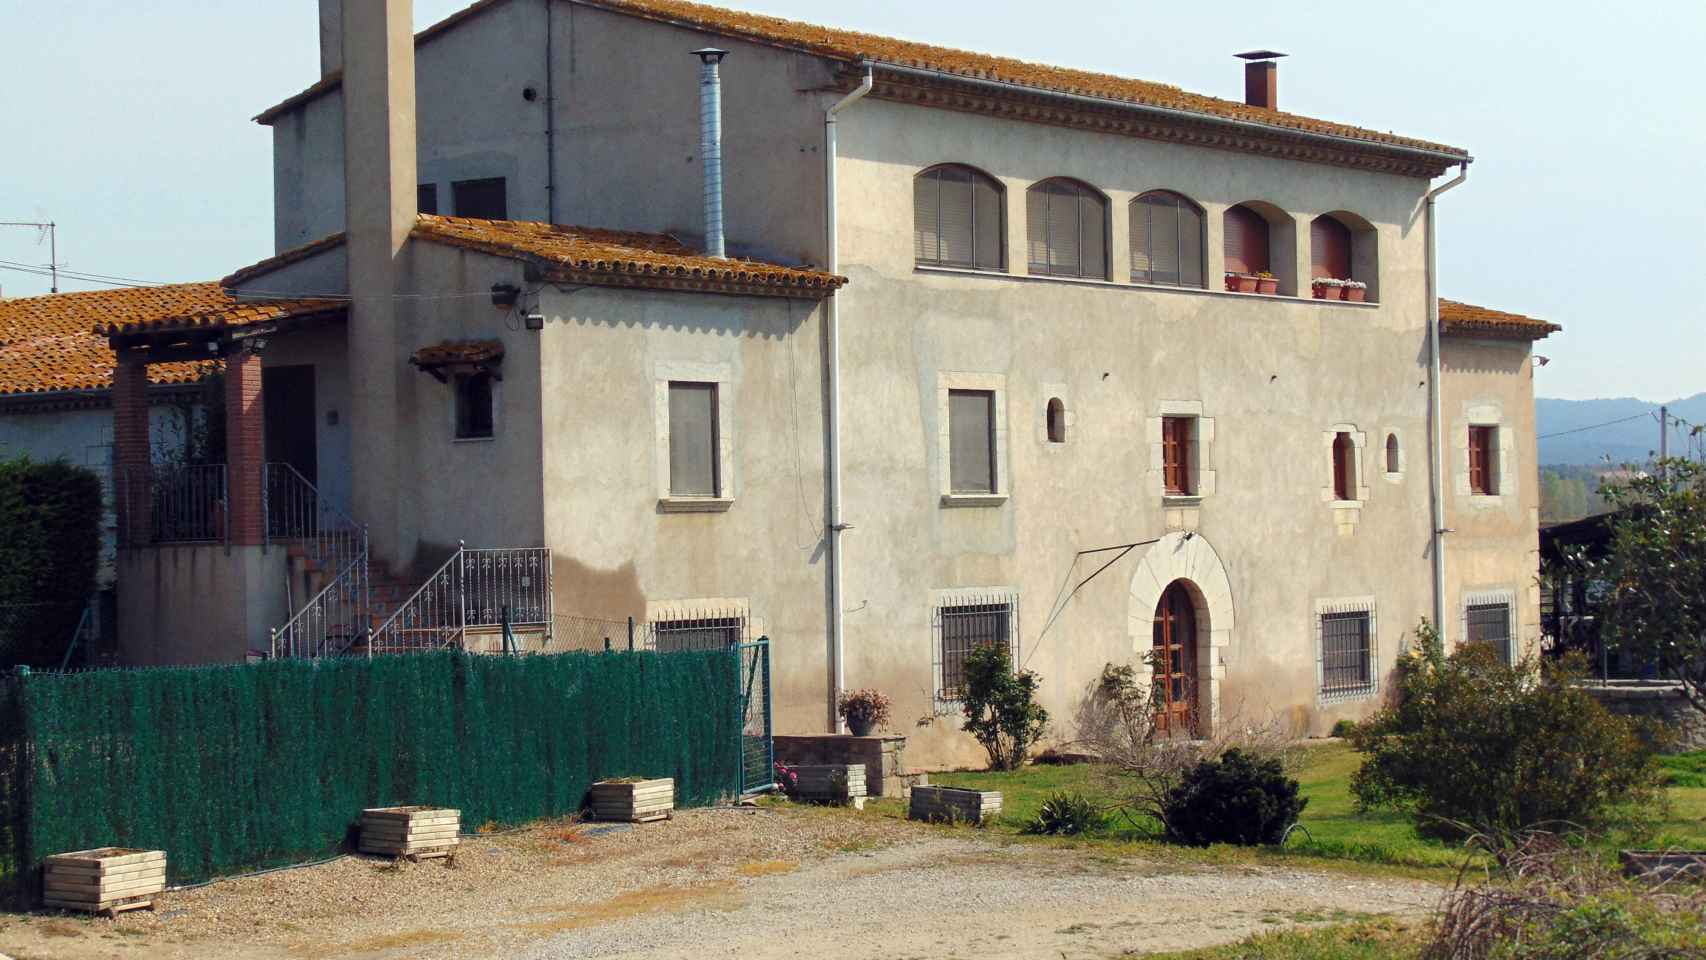 Mas Riurola, granja propiedad de Vardan Khosrovyan en Llagostera (Girona)